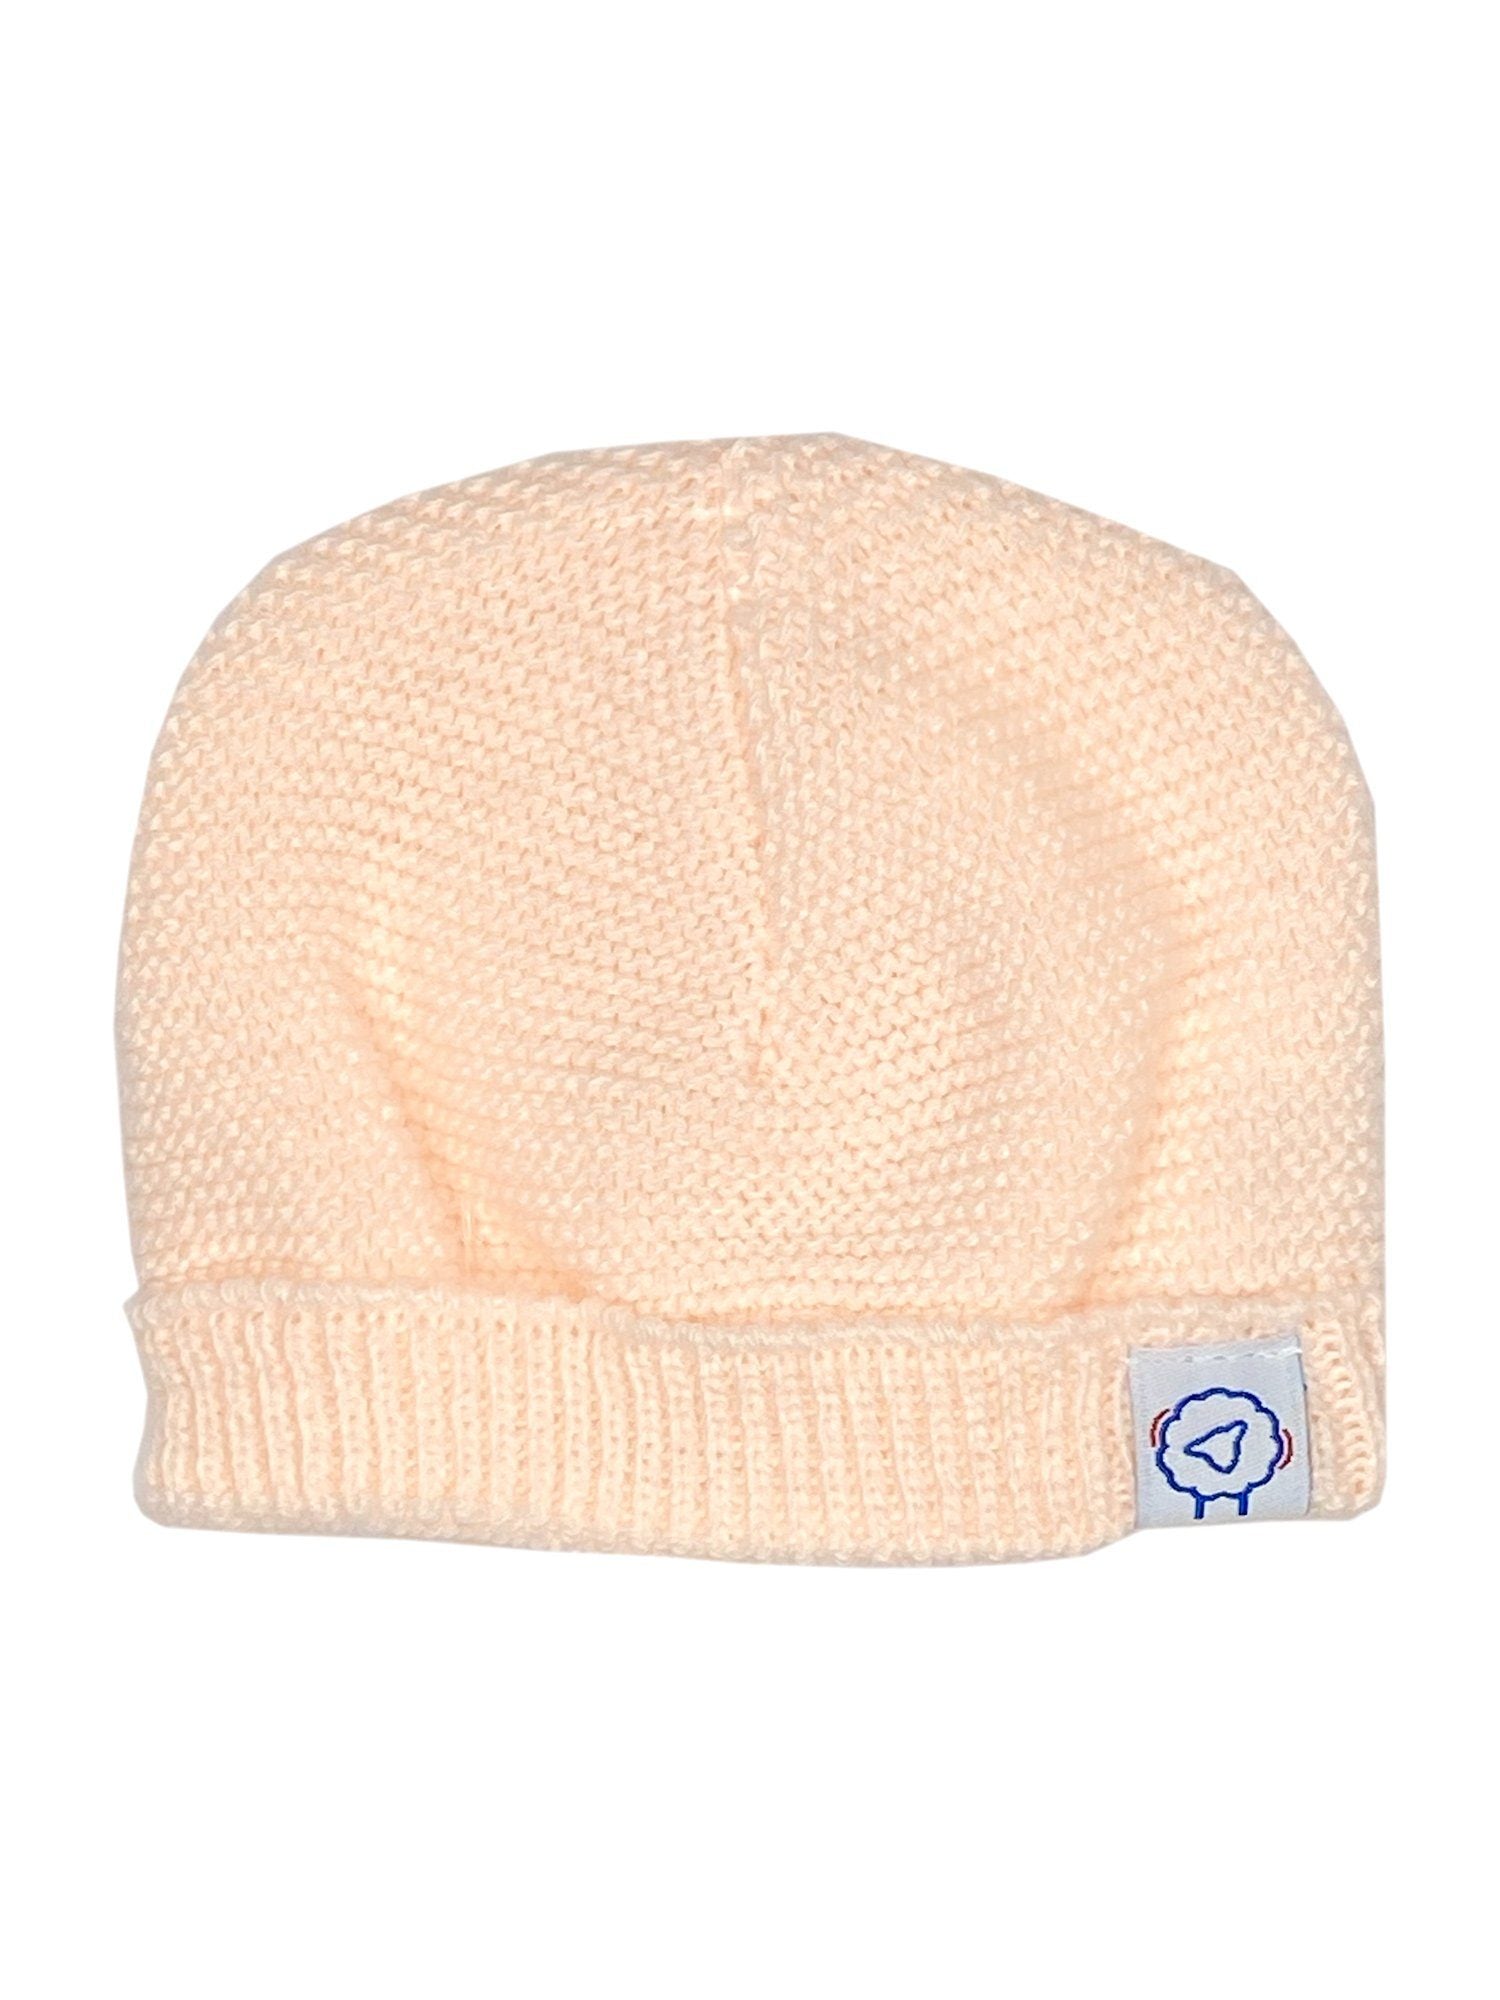 Knitted Hat, Peach Pink Hat La Manufacture de Layette 